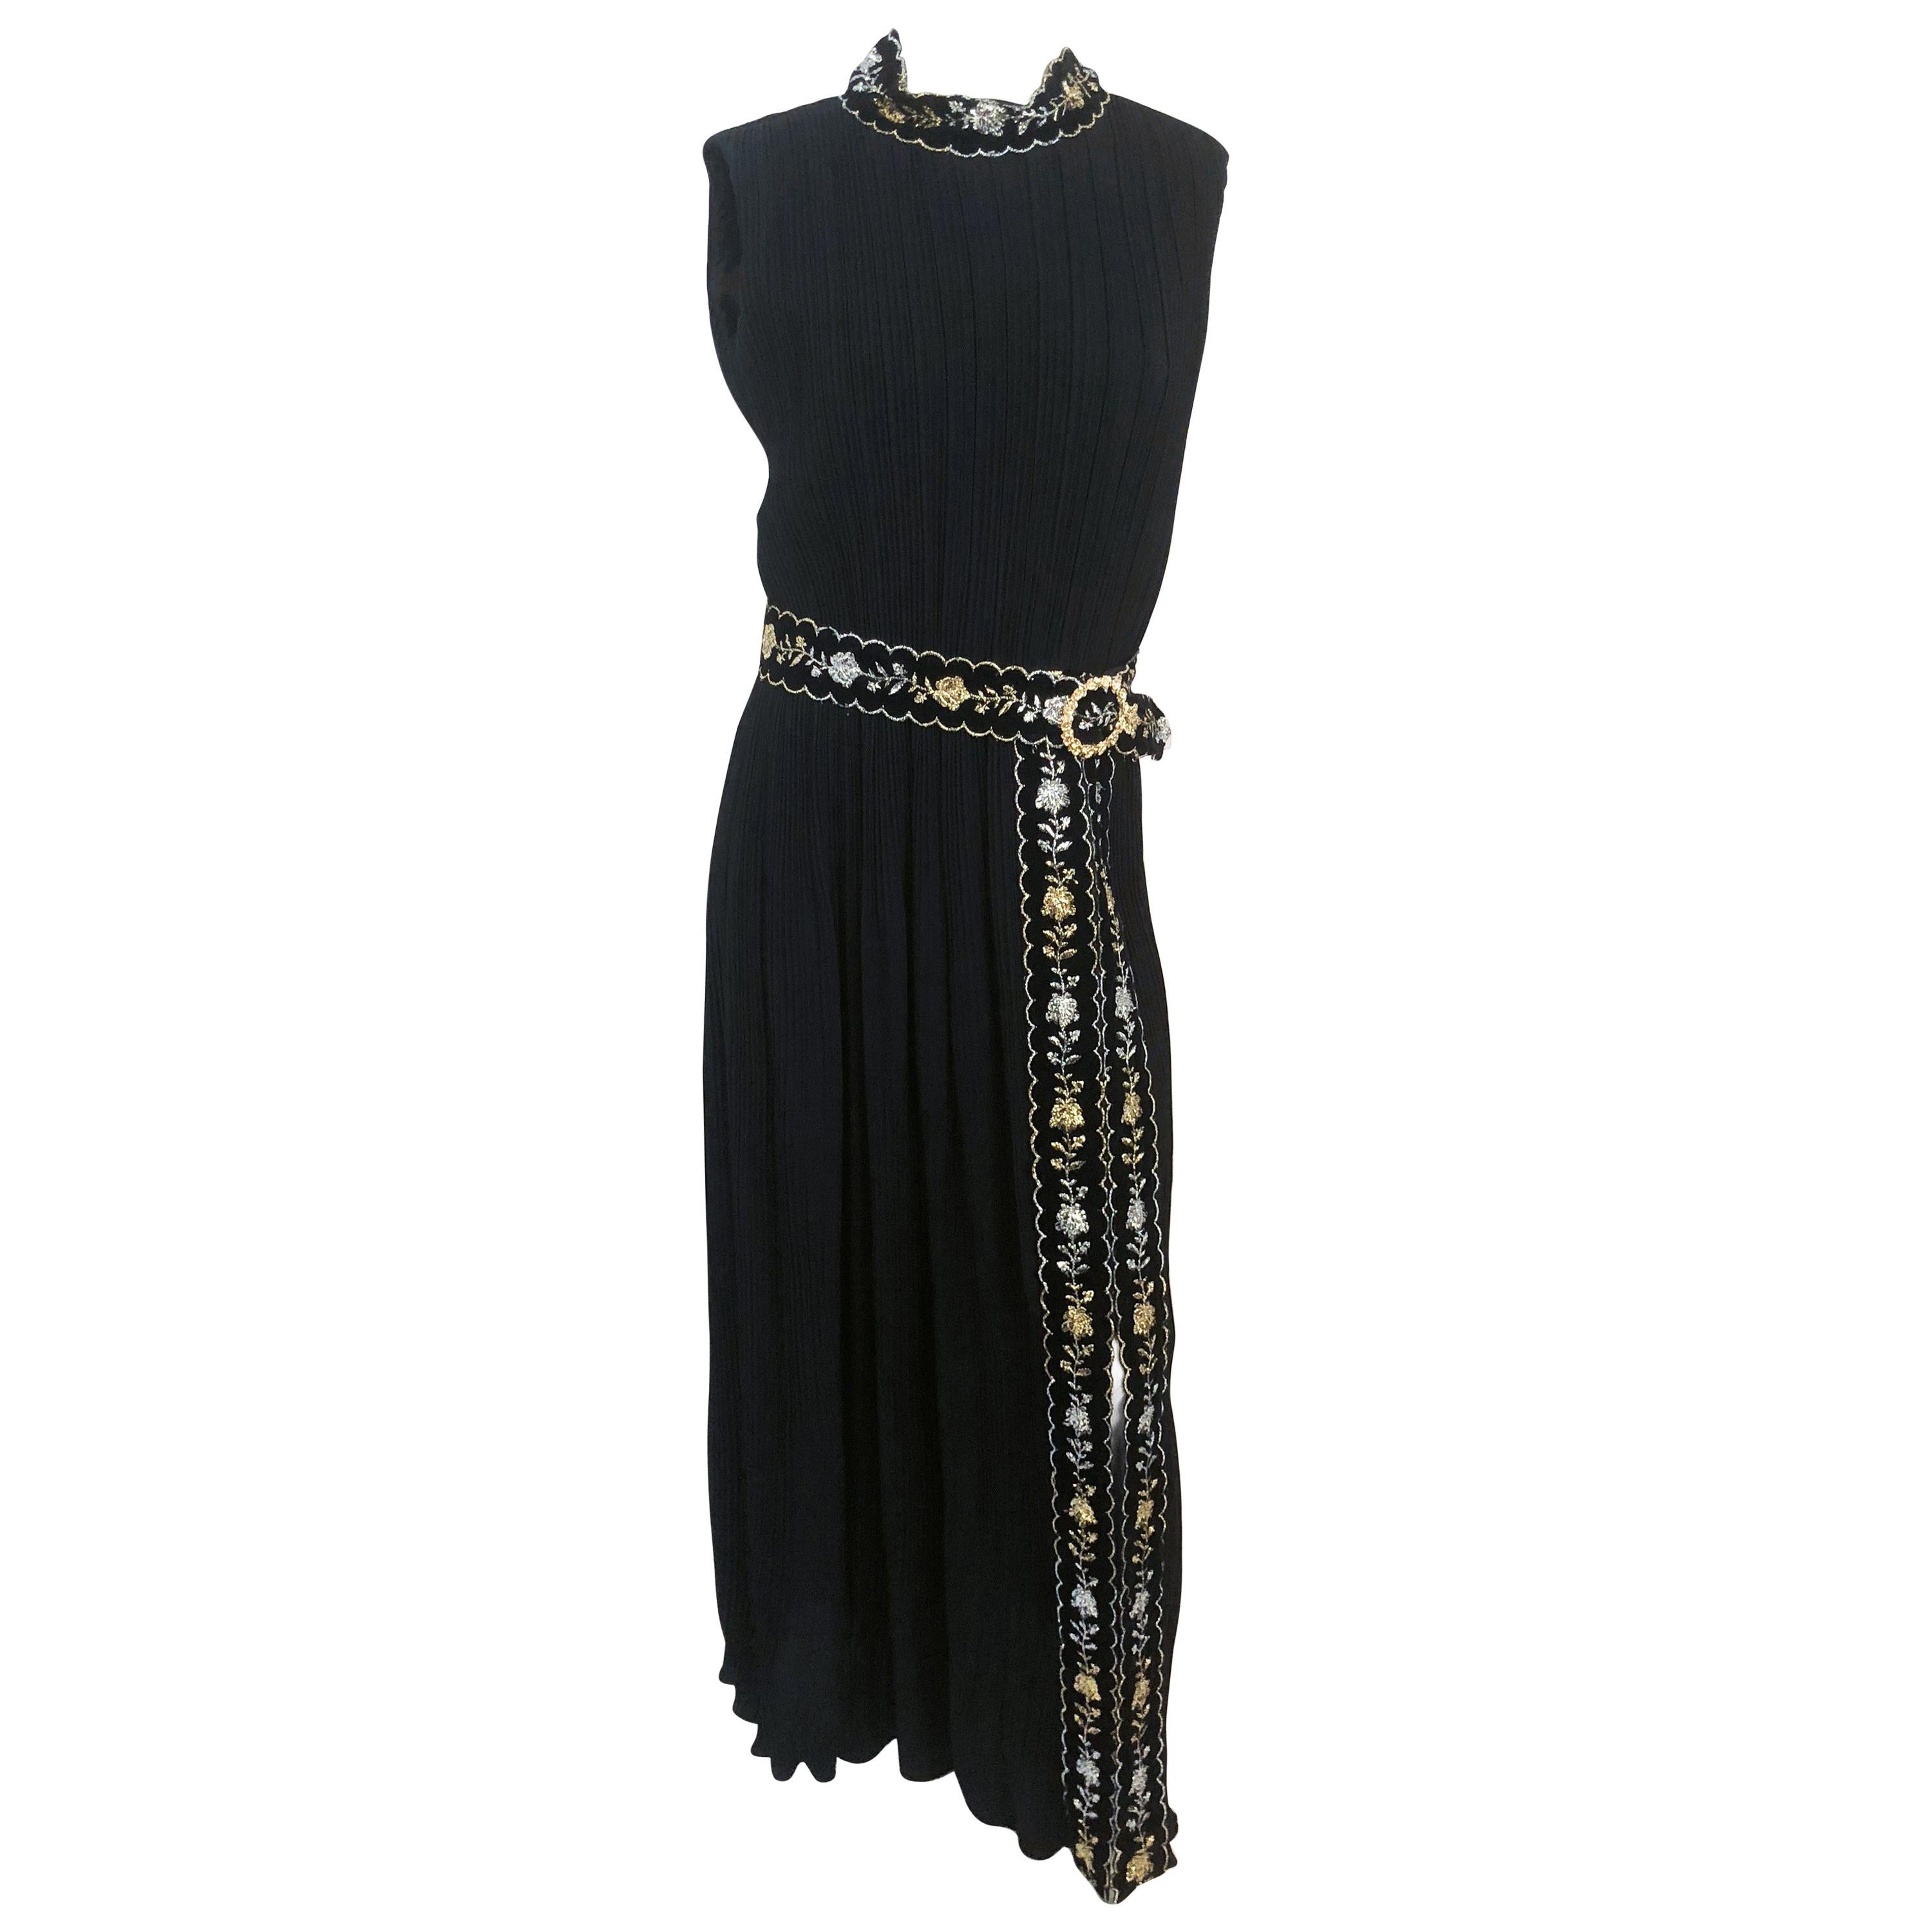 1960s Black Pleated Sleeveless Dress with Velvet and Metallic Details